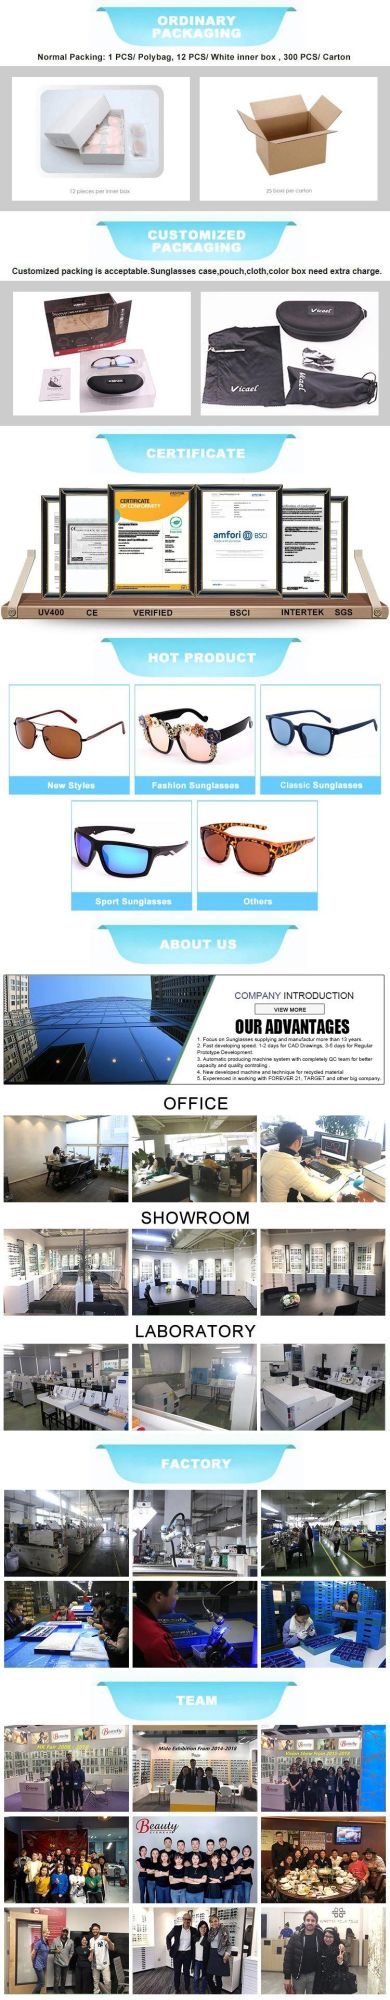 Men′s Customised Sport Sunglasses Quality